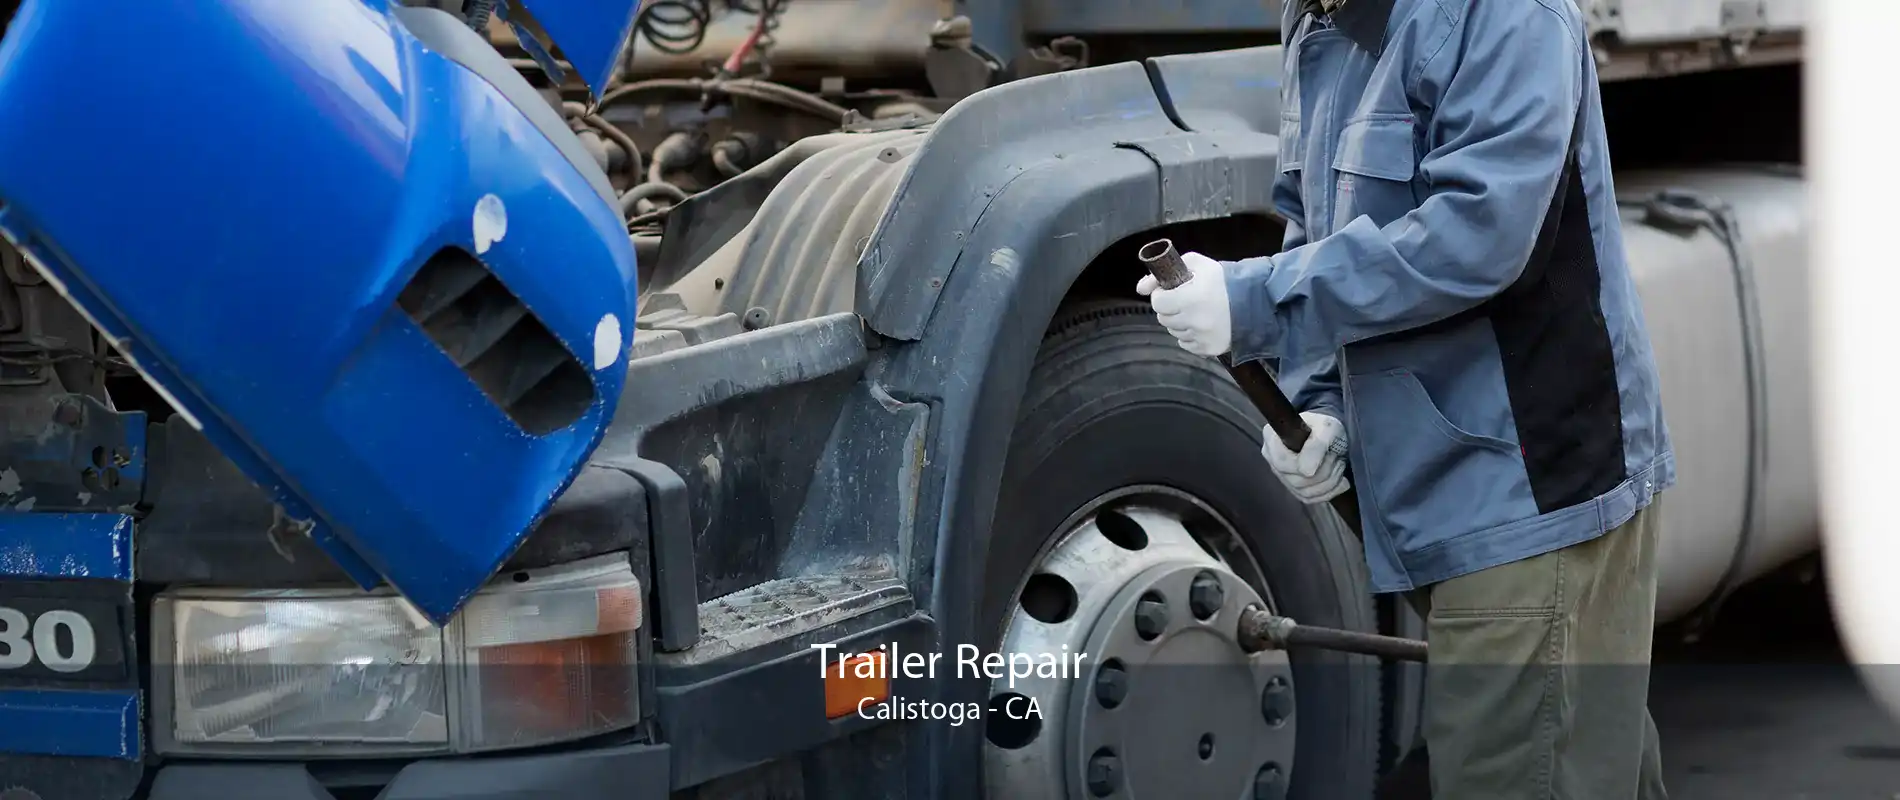 Trailer Repair Calistoga - CA